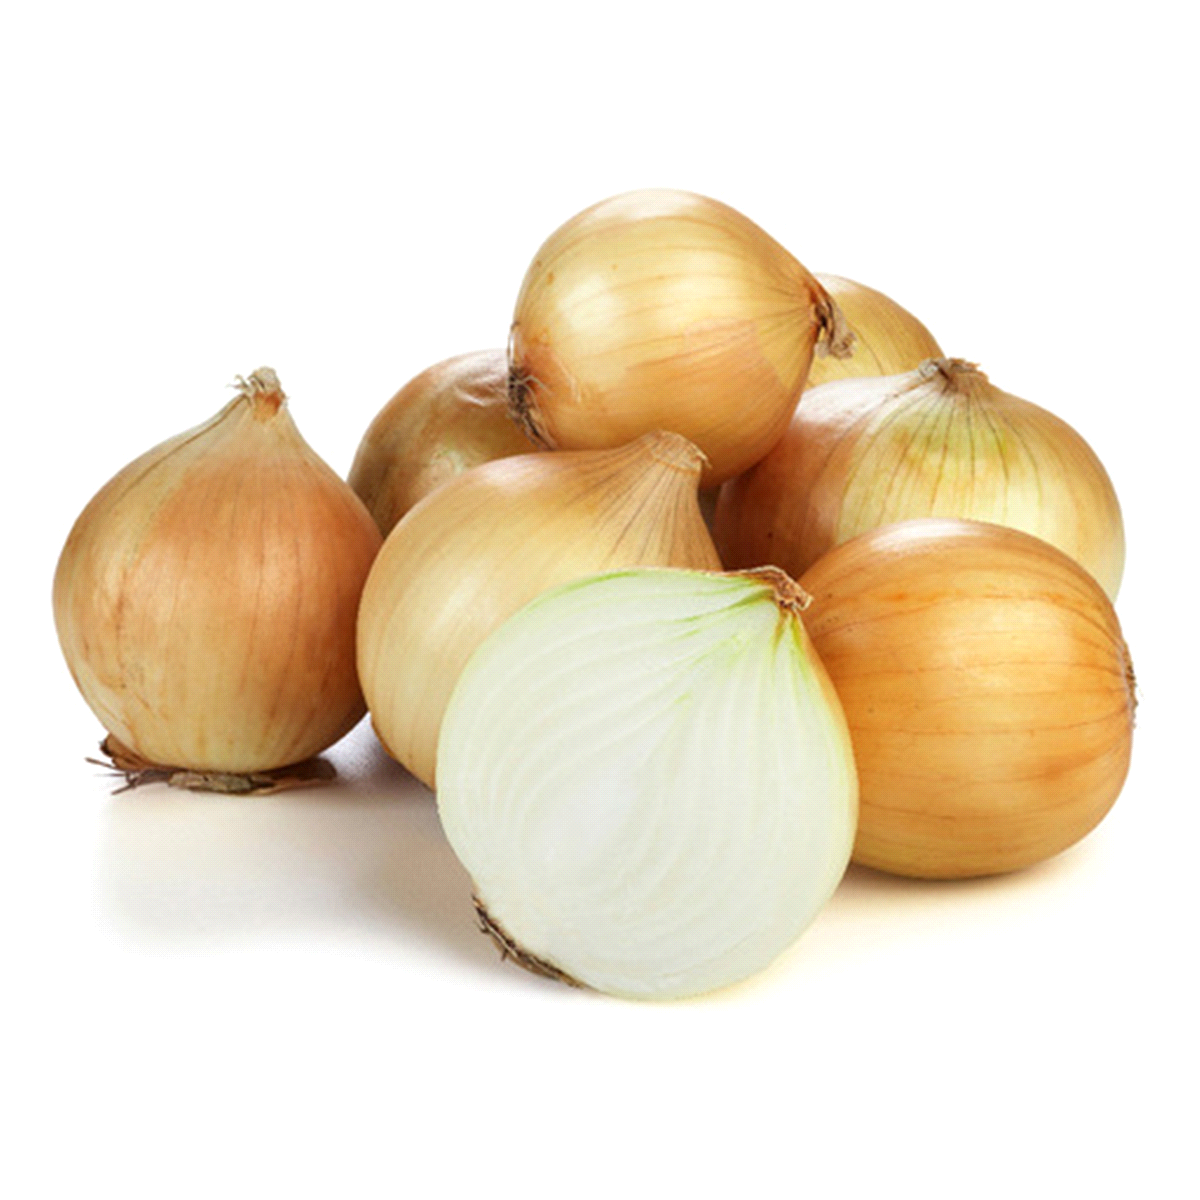 More onions.